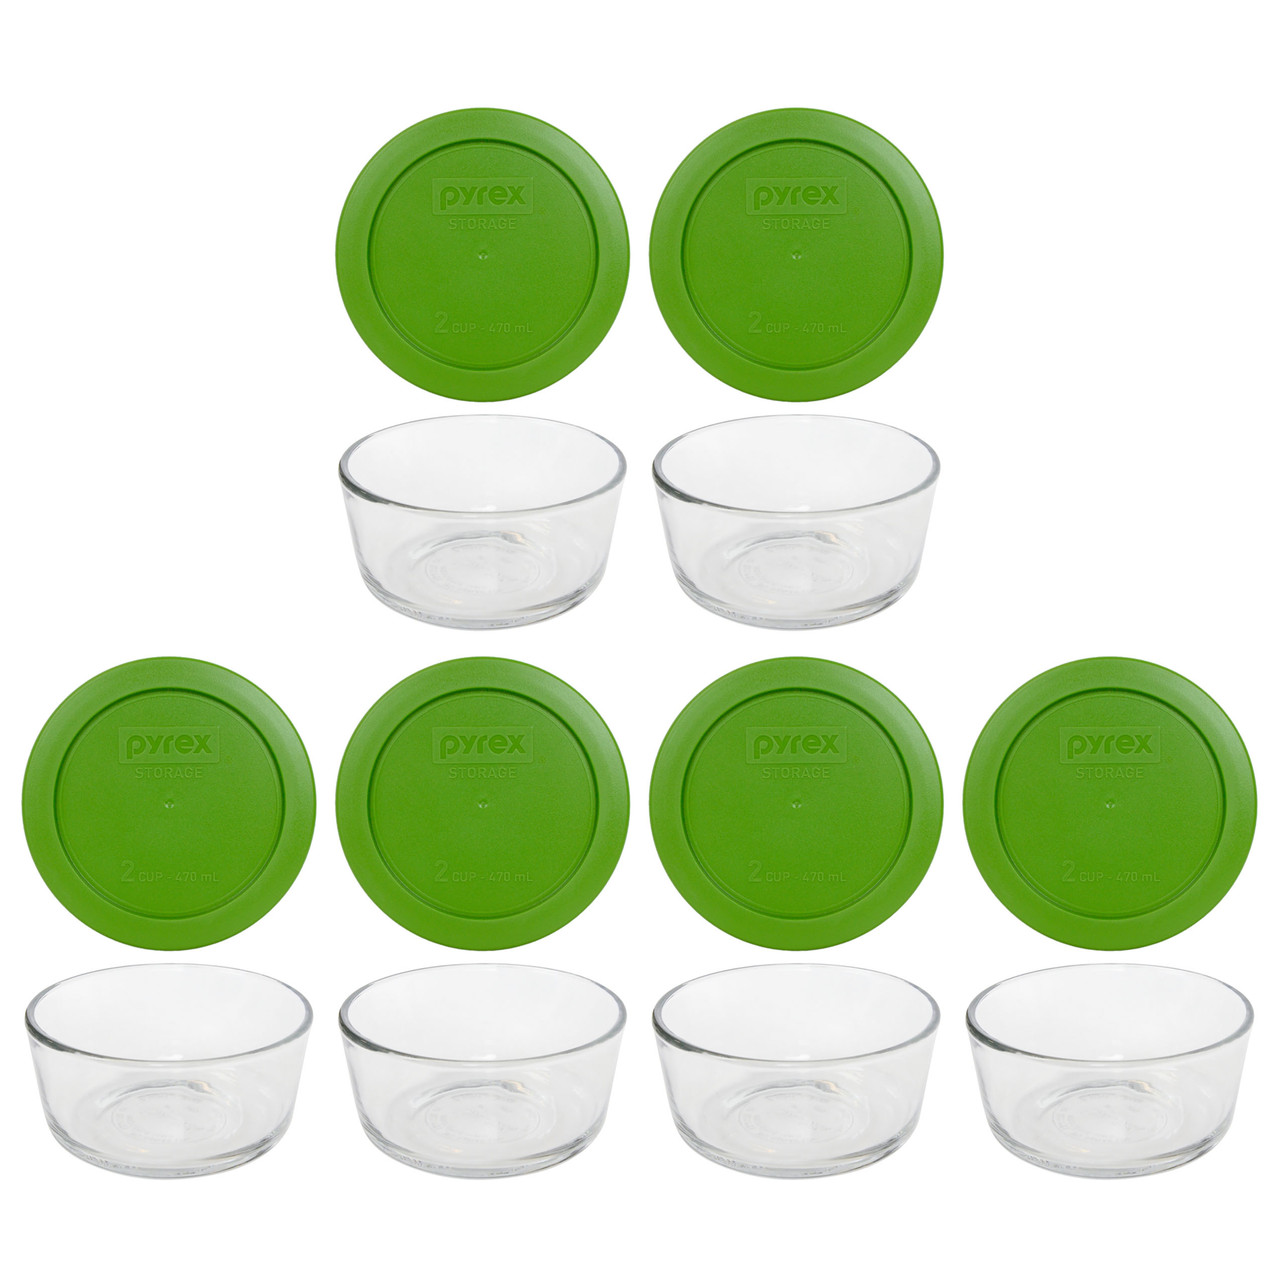  Pyrex 6-Piece 2-Cup Glass Food Storage Set with Lids